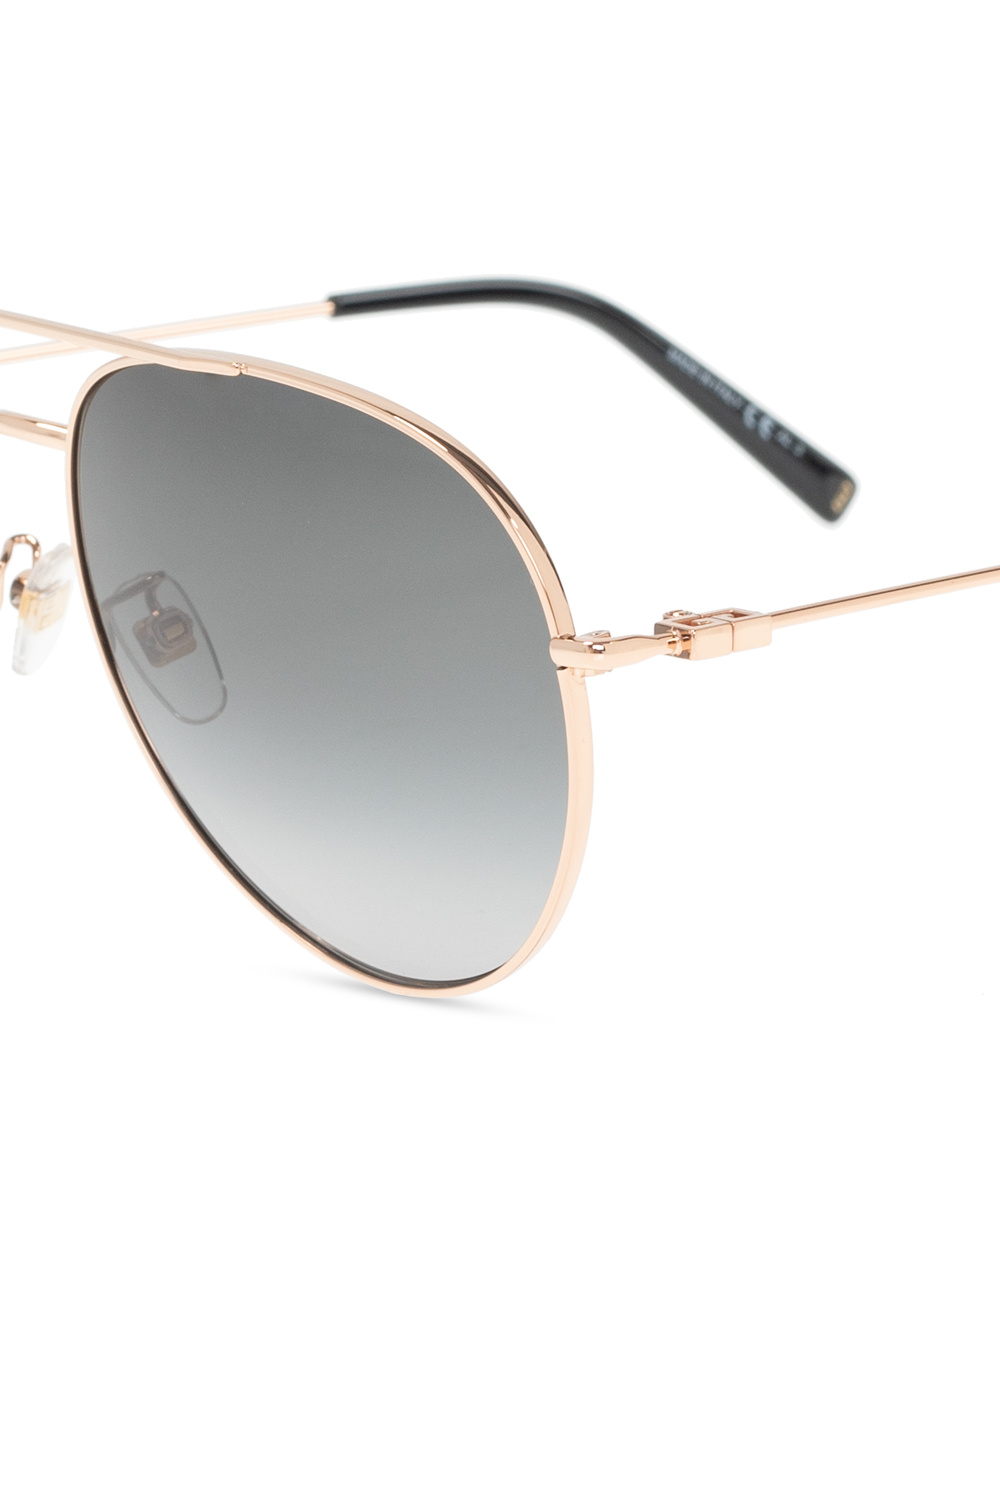 Givenchy cazal 7343 sunglasses item